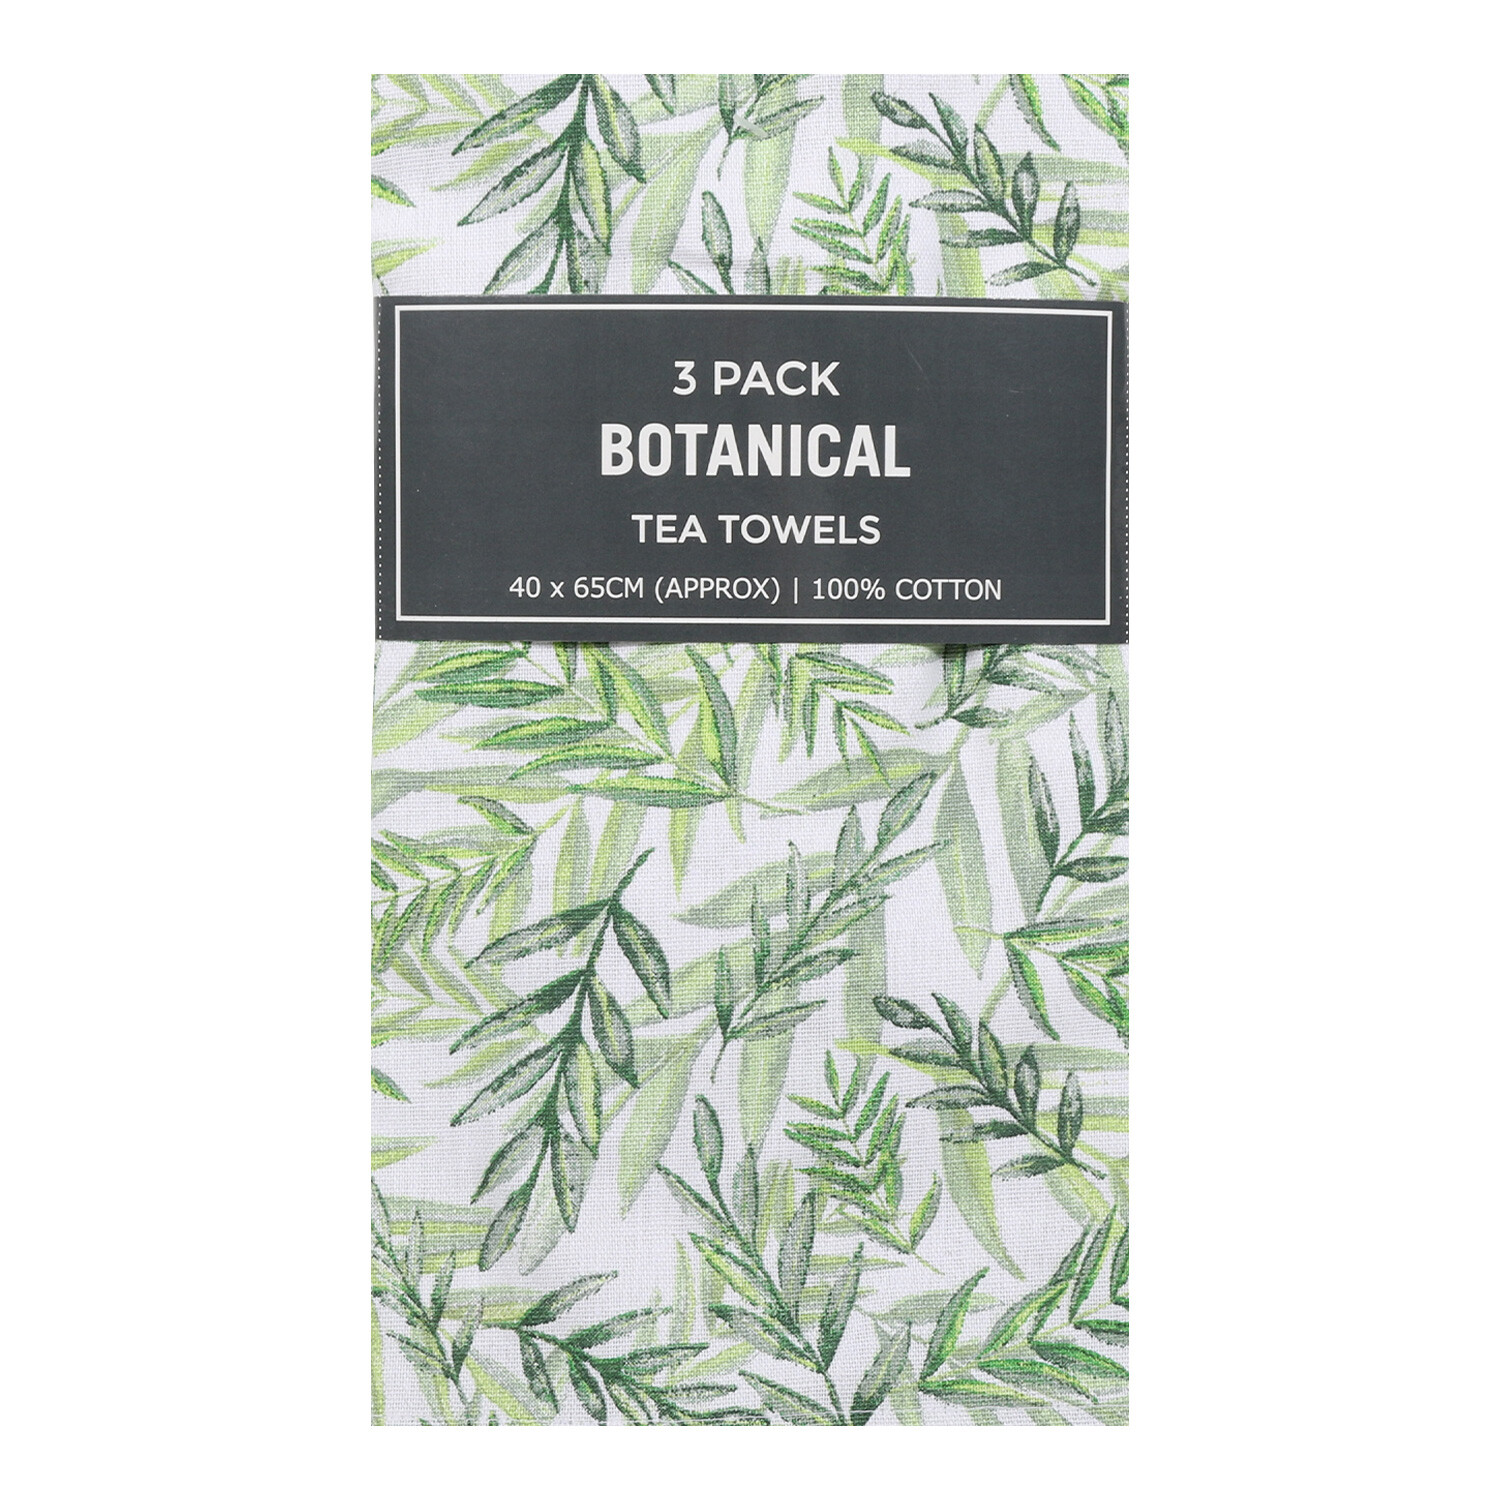 Green Botanical Tea Towels 3 Pack Image 1